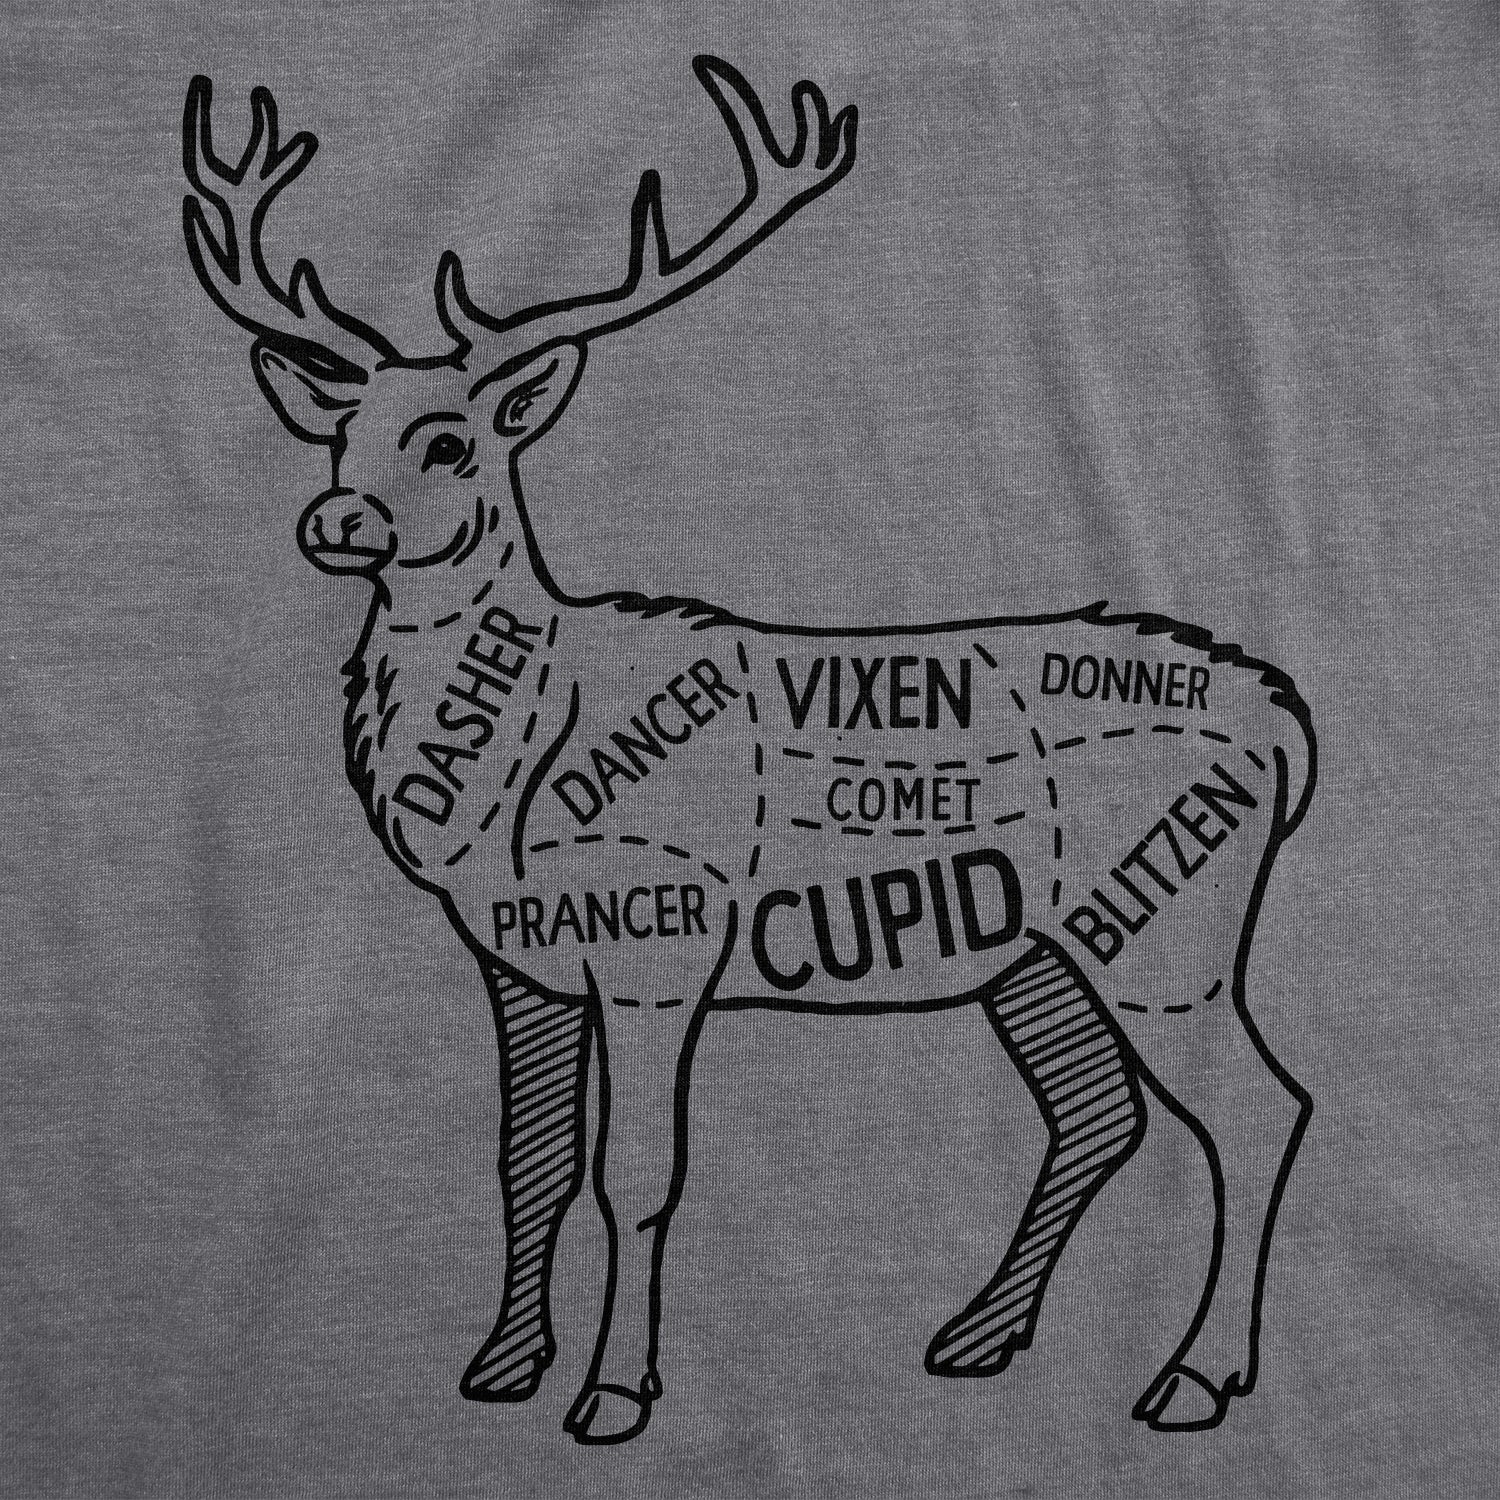 Funny Dark Heather Grey - REINDEER Reindeer Meat Cuts Womens T Shirt Nerdy christmas Sarcastic Tee